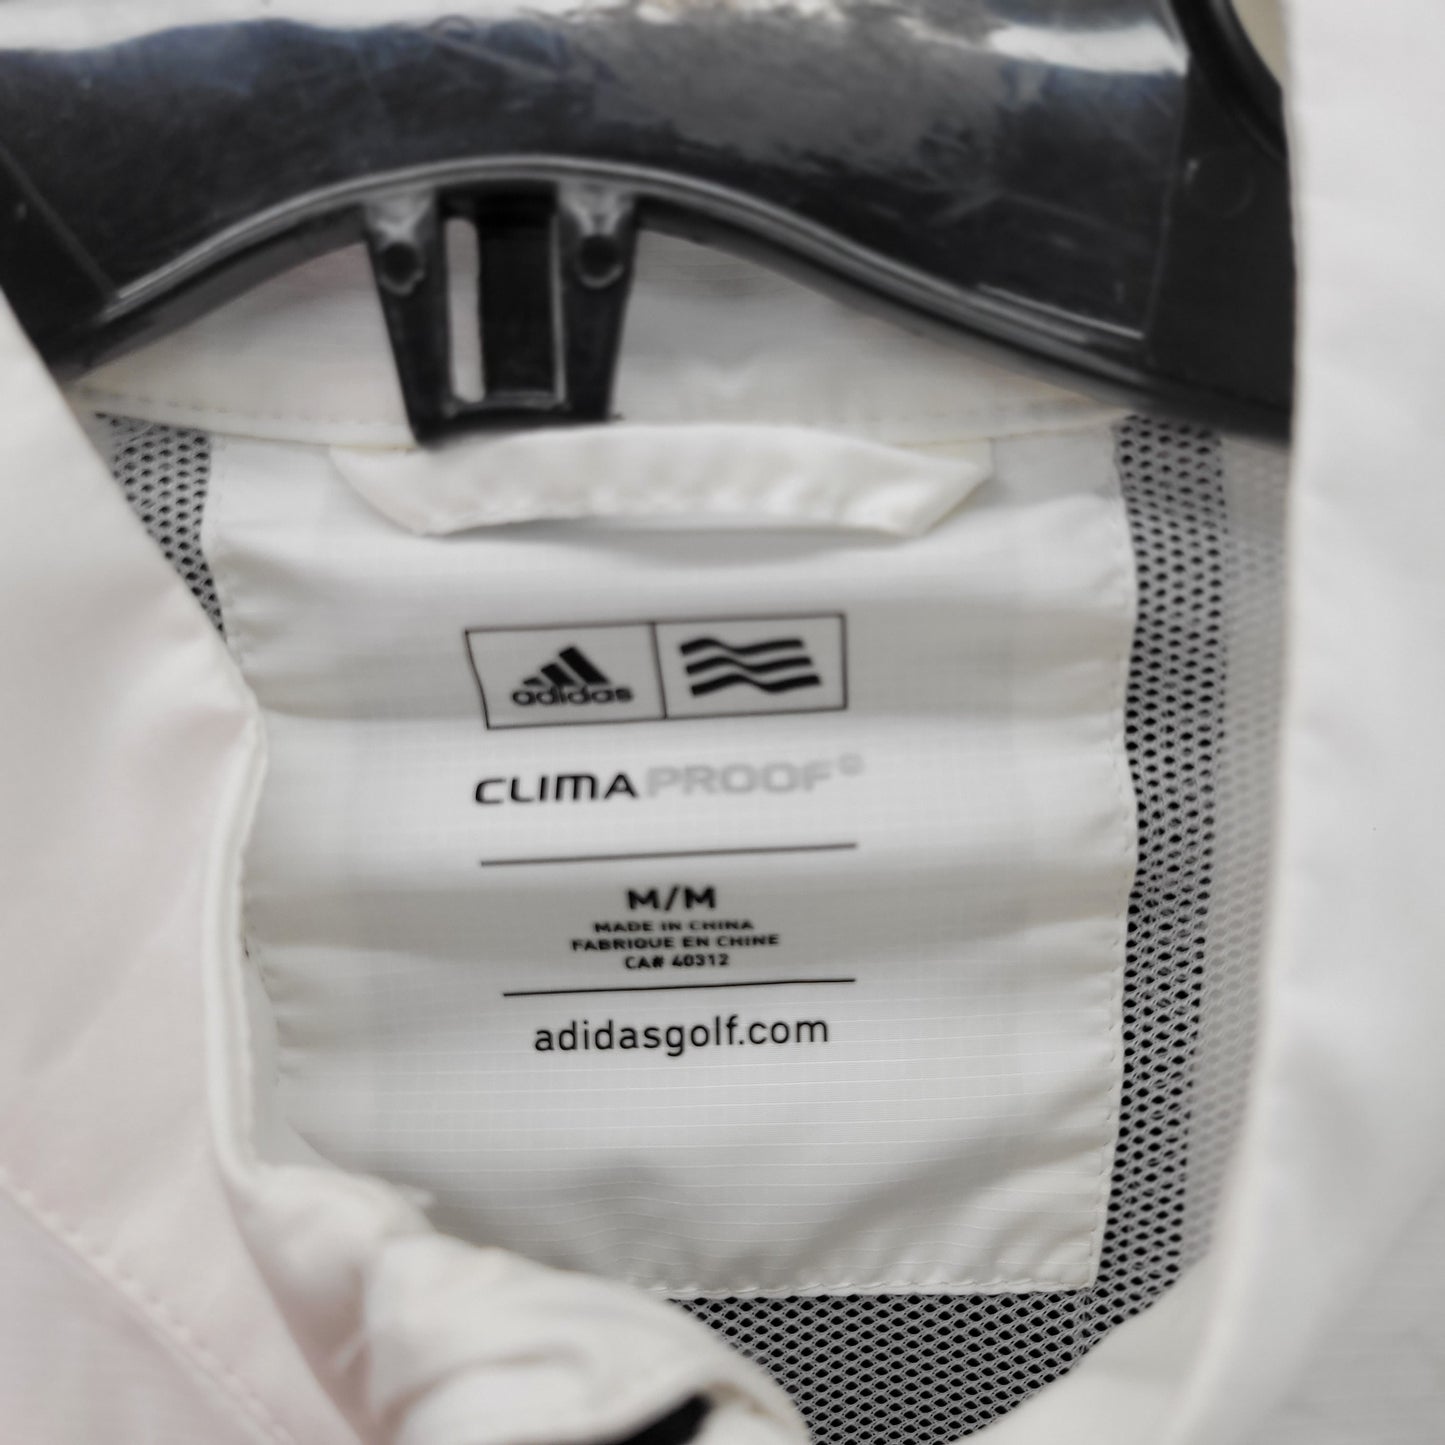 Adidas Golf Men's Quarter Zip Shirt White/Black - Medium